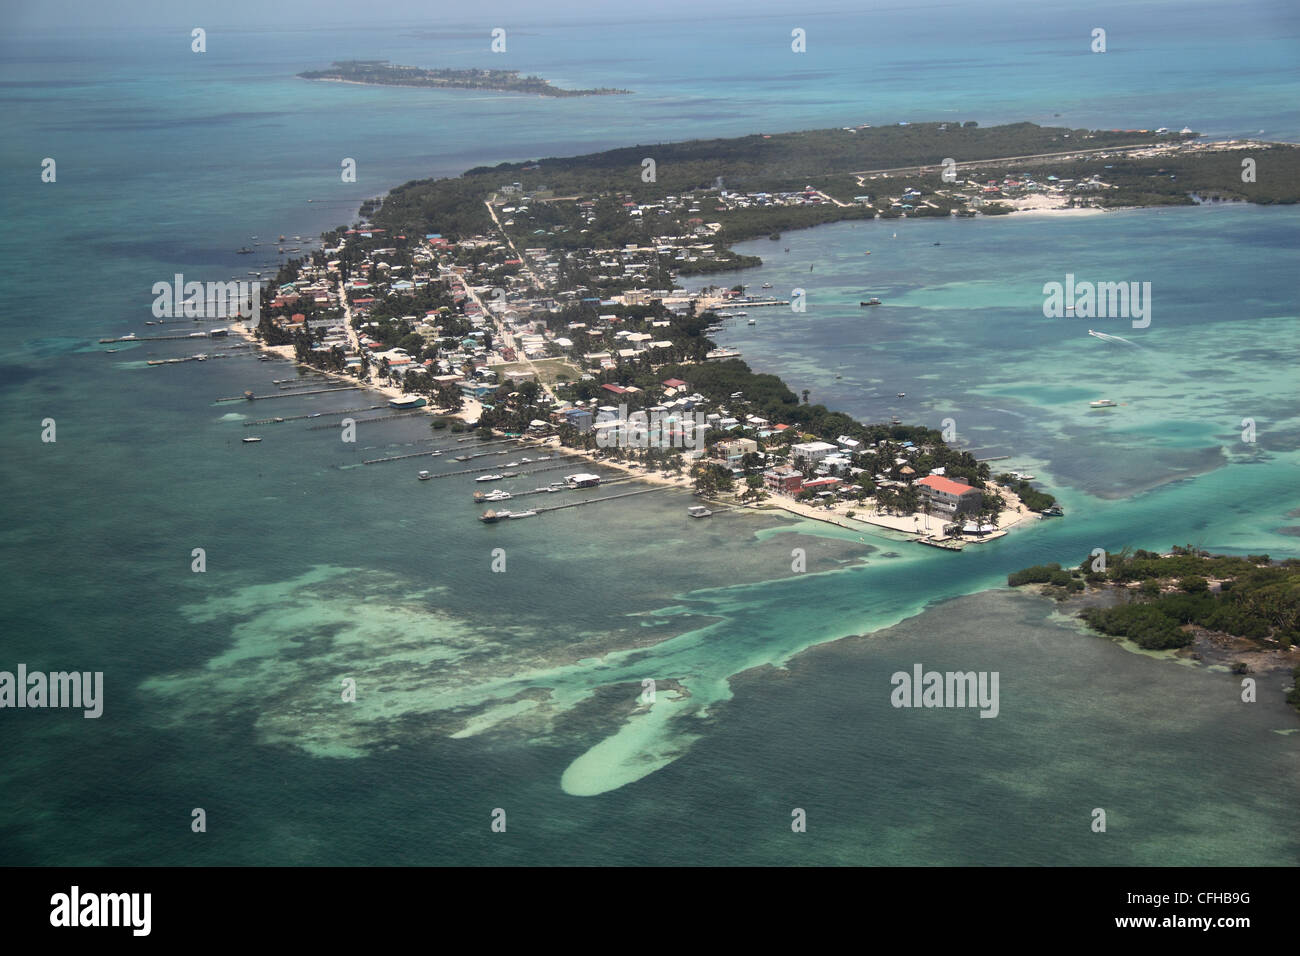 Caye Caulker, Belize Barrier Reef, Belize, dei Caraibi e America centrale Foto Stock